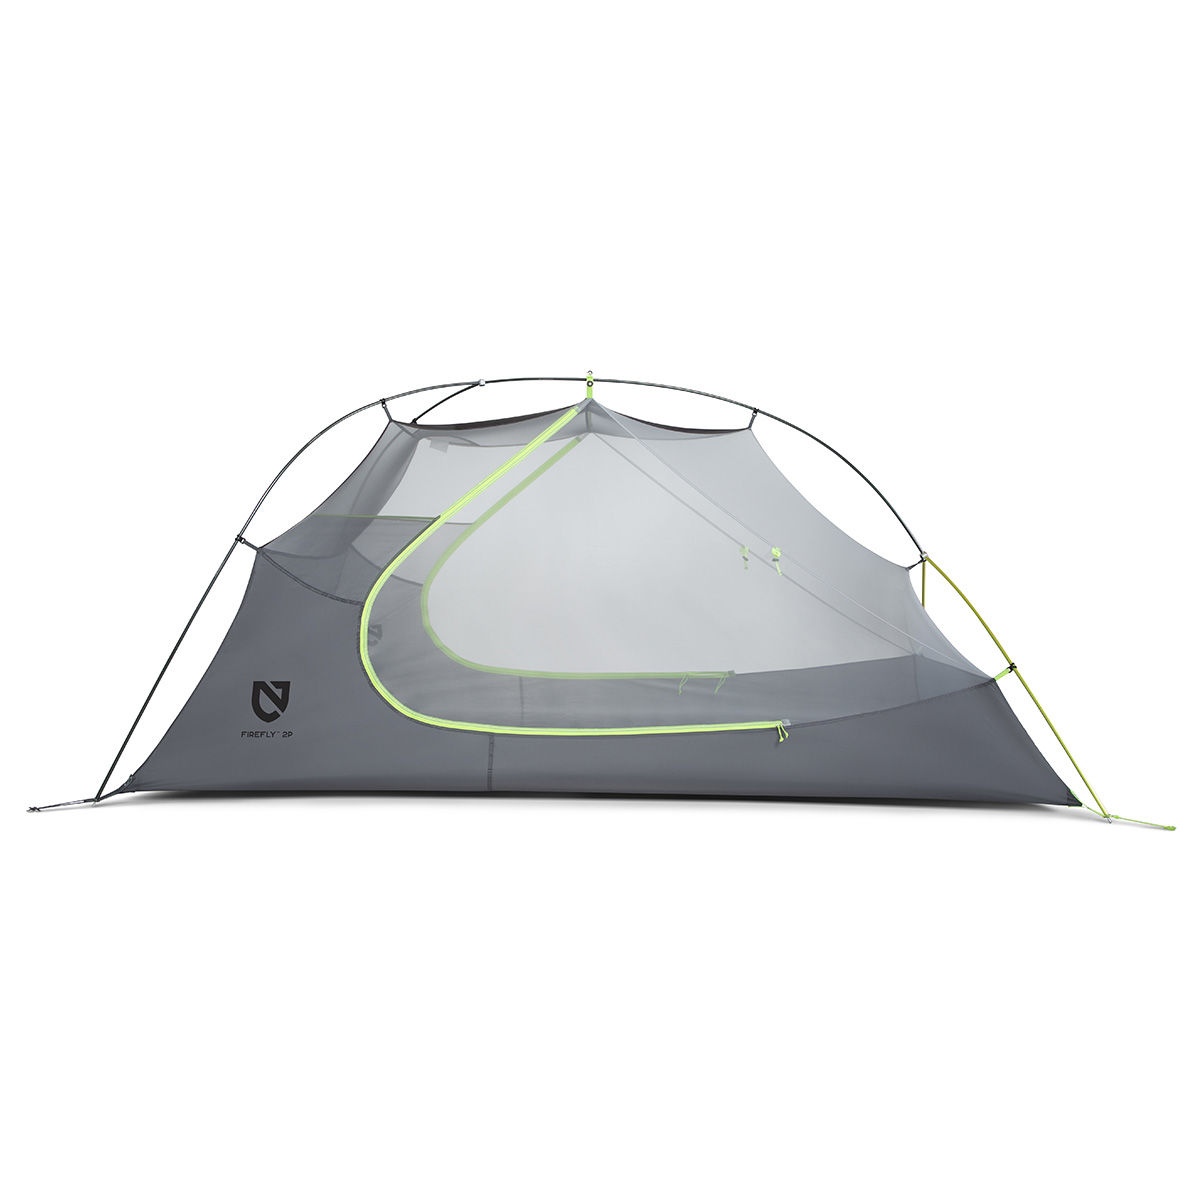 Firefly Backpacking Tent NEMO Equipment